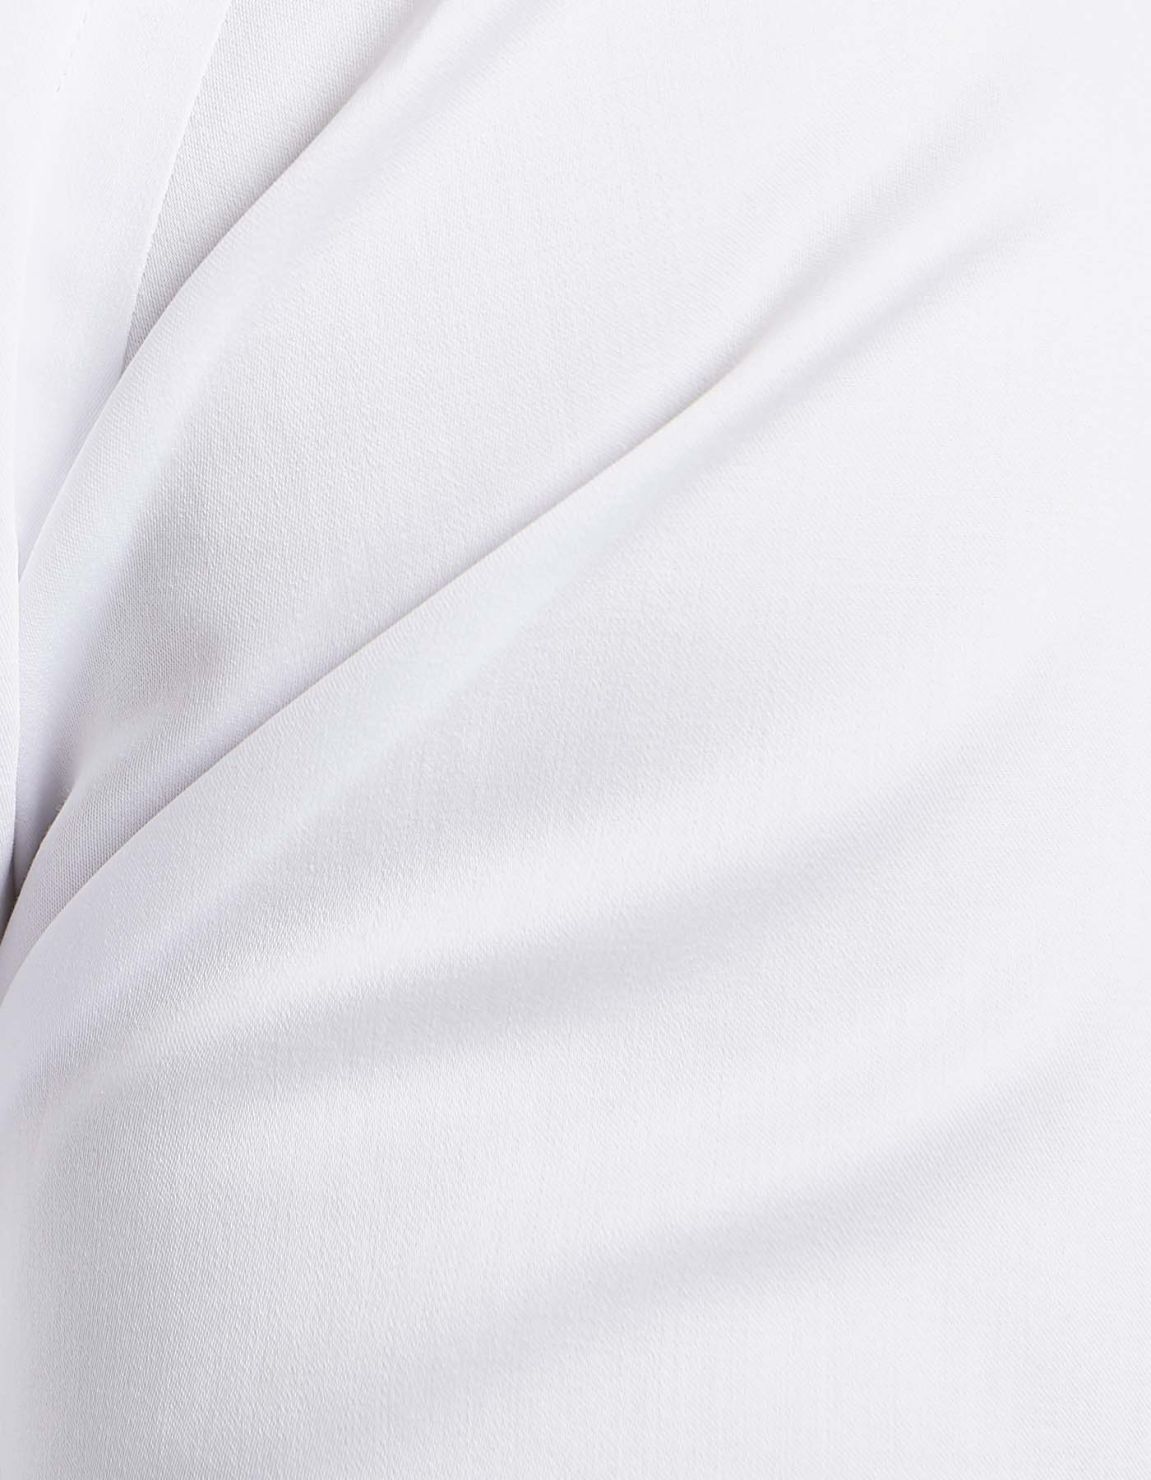 White Canvas Solid colour Shirt Collar cutaway Slim Fit 2